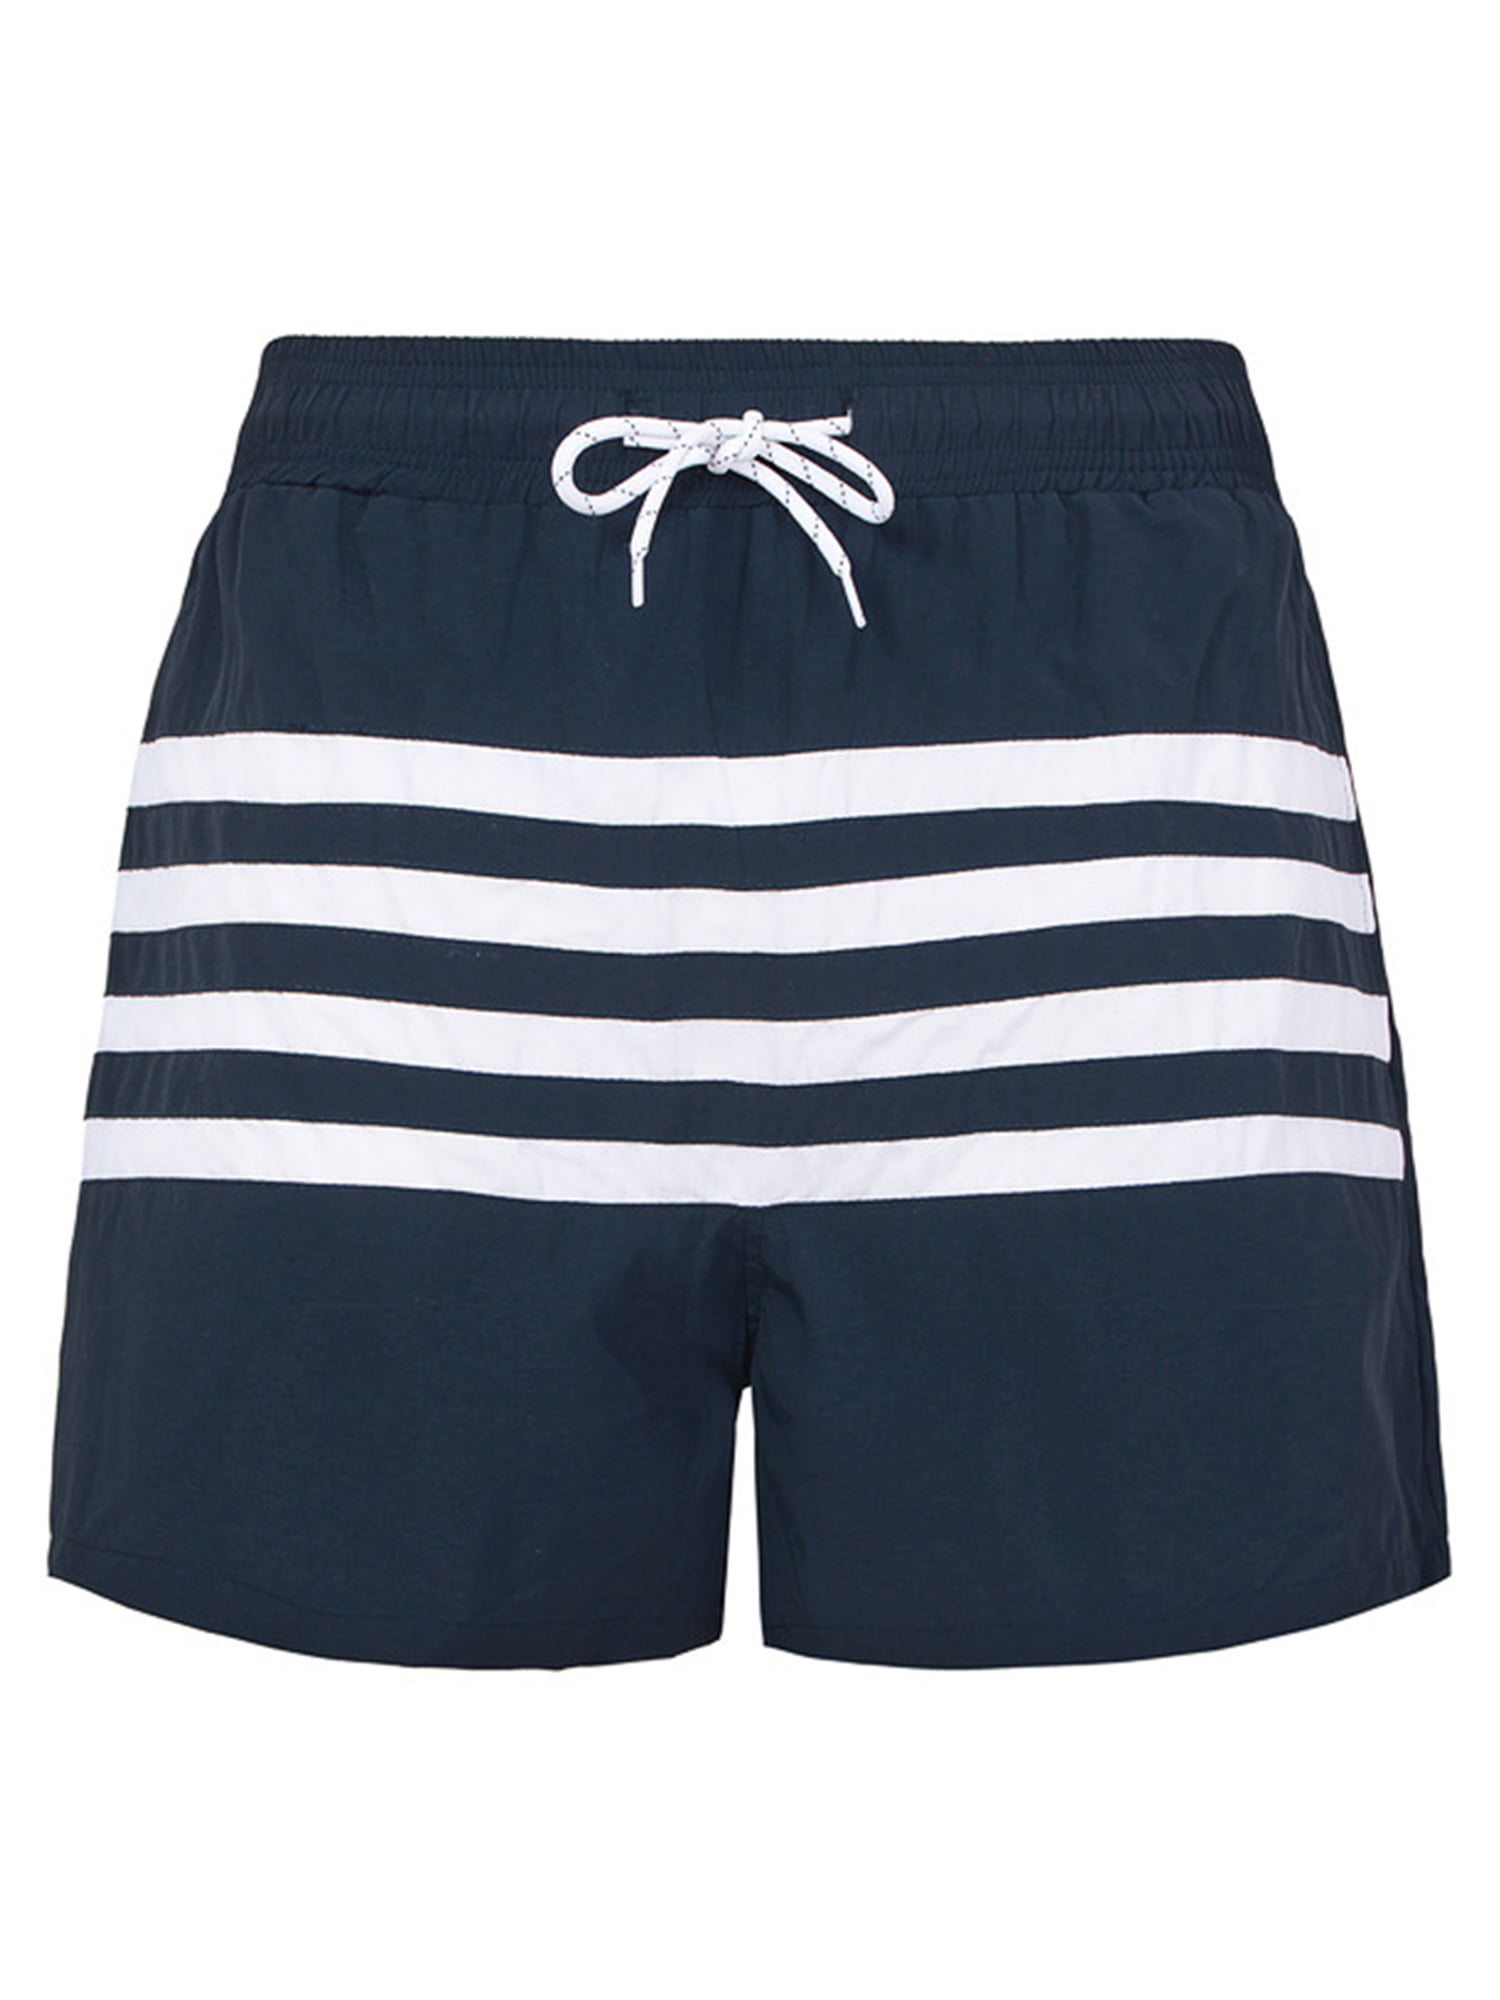 Mens Summer Swimming Swim Shorts Casual Beach Surf Board Cotton Short Striped 